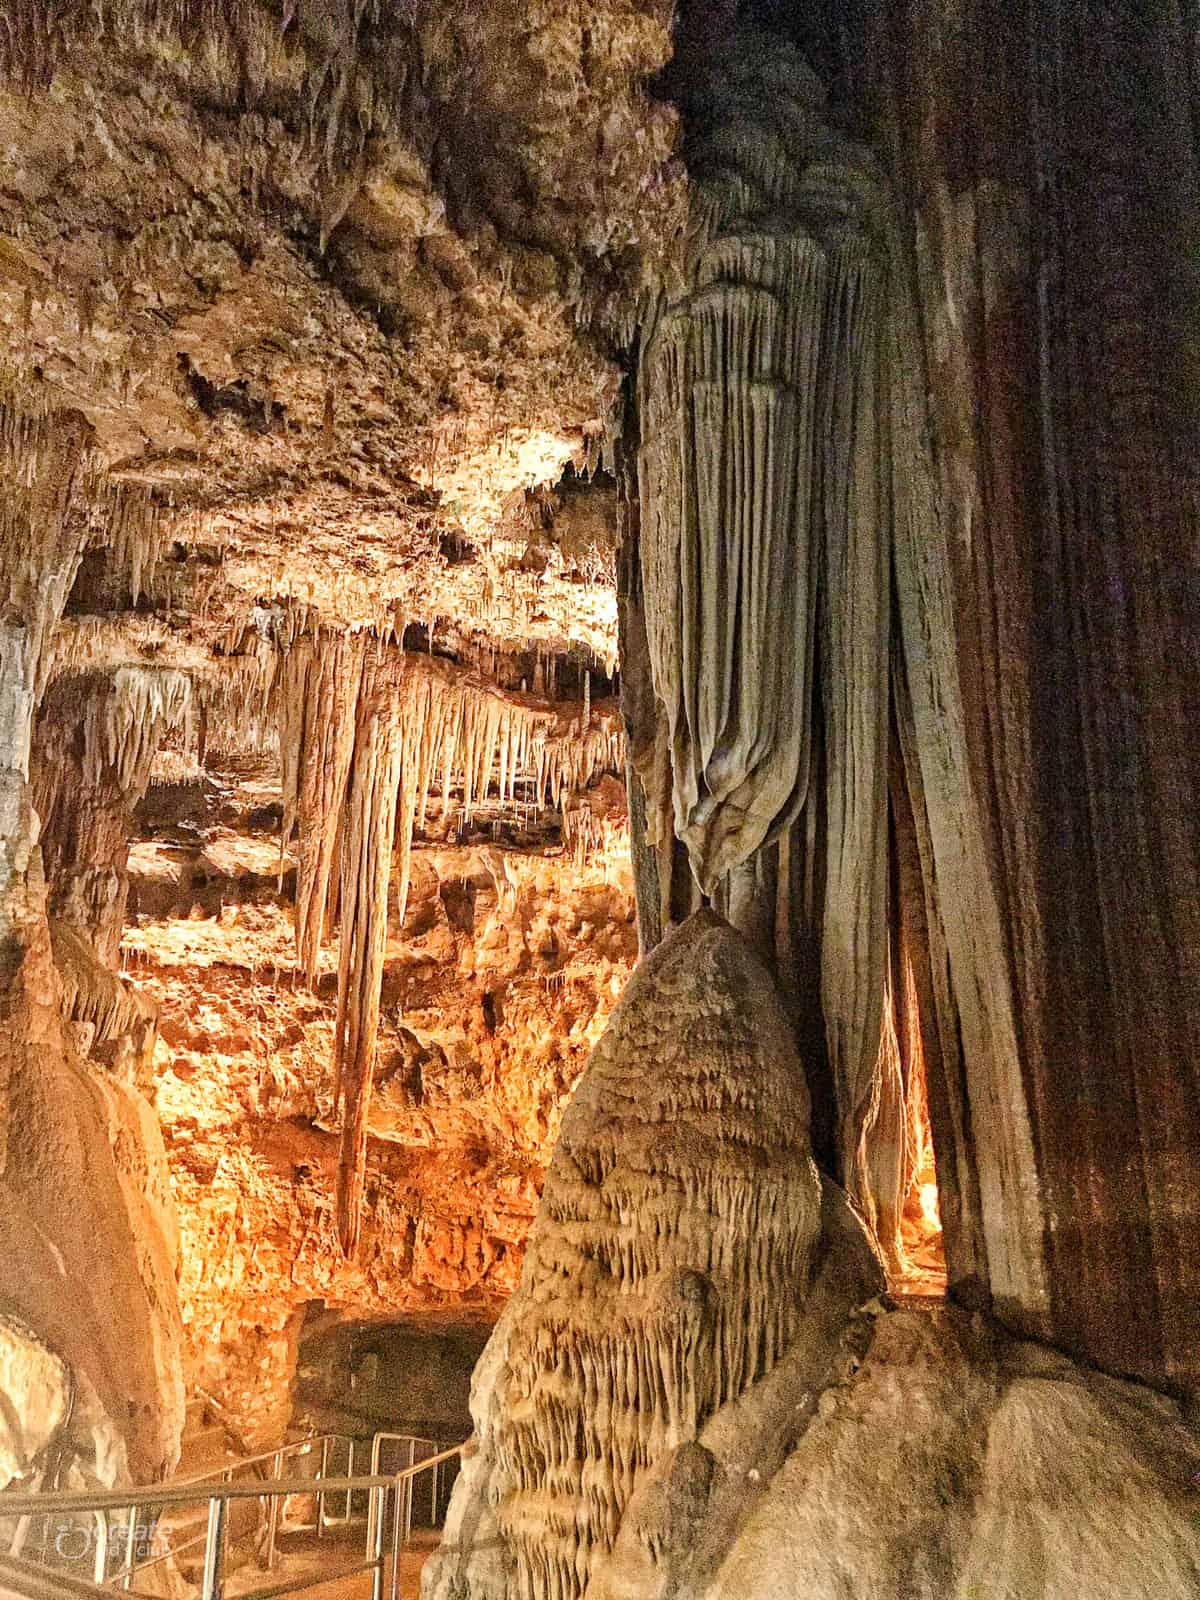 Meramec caverns